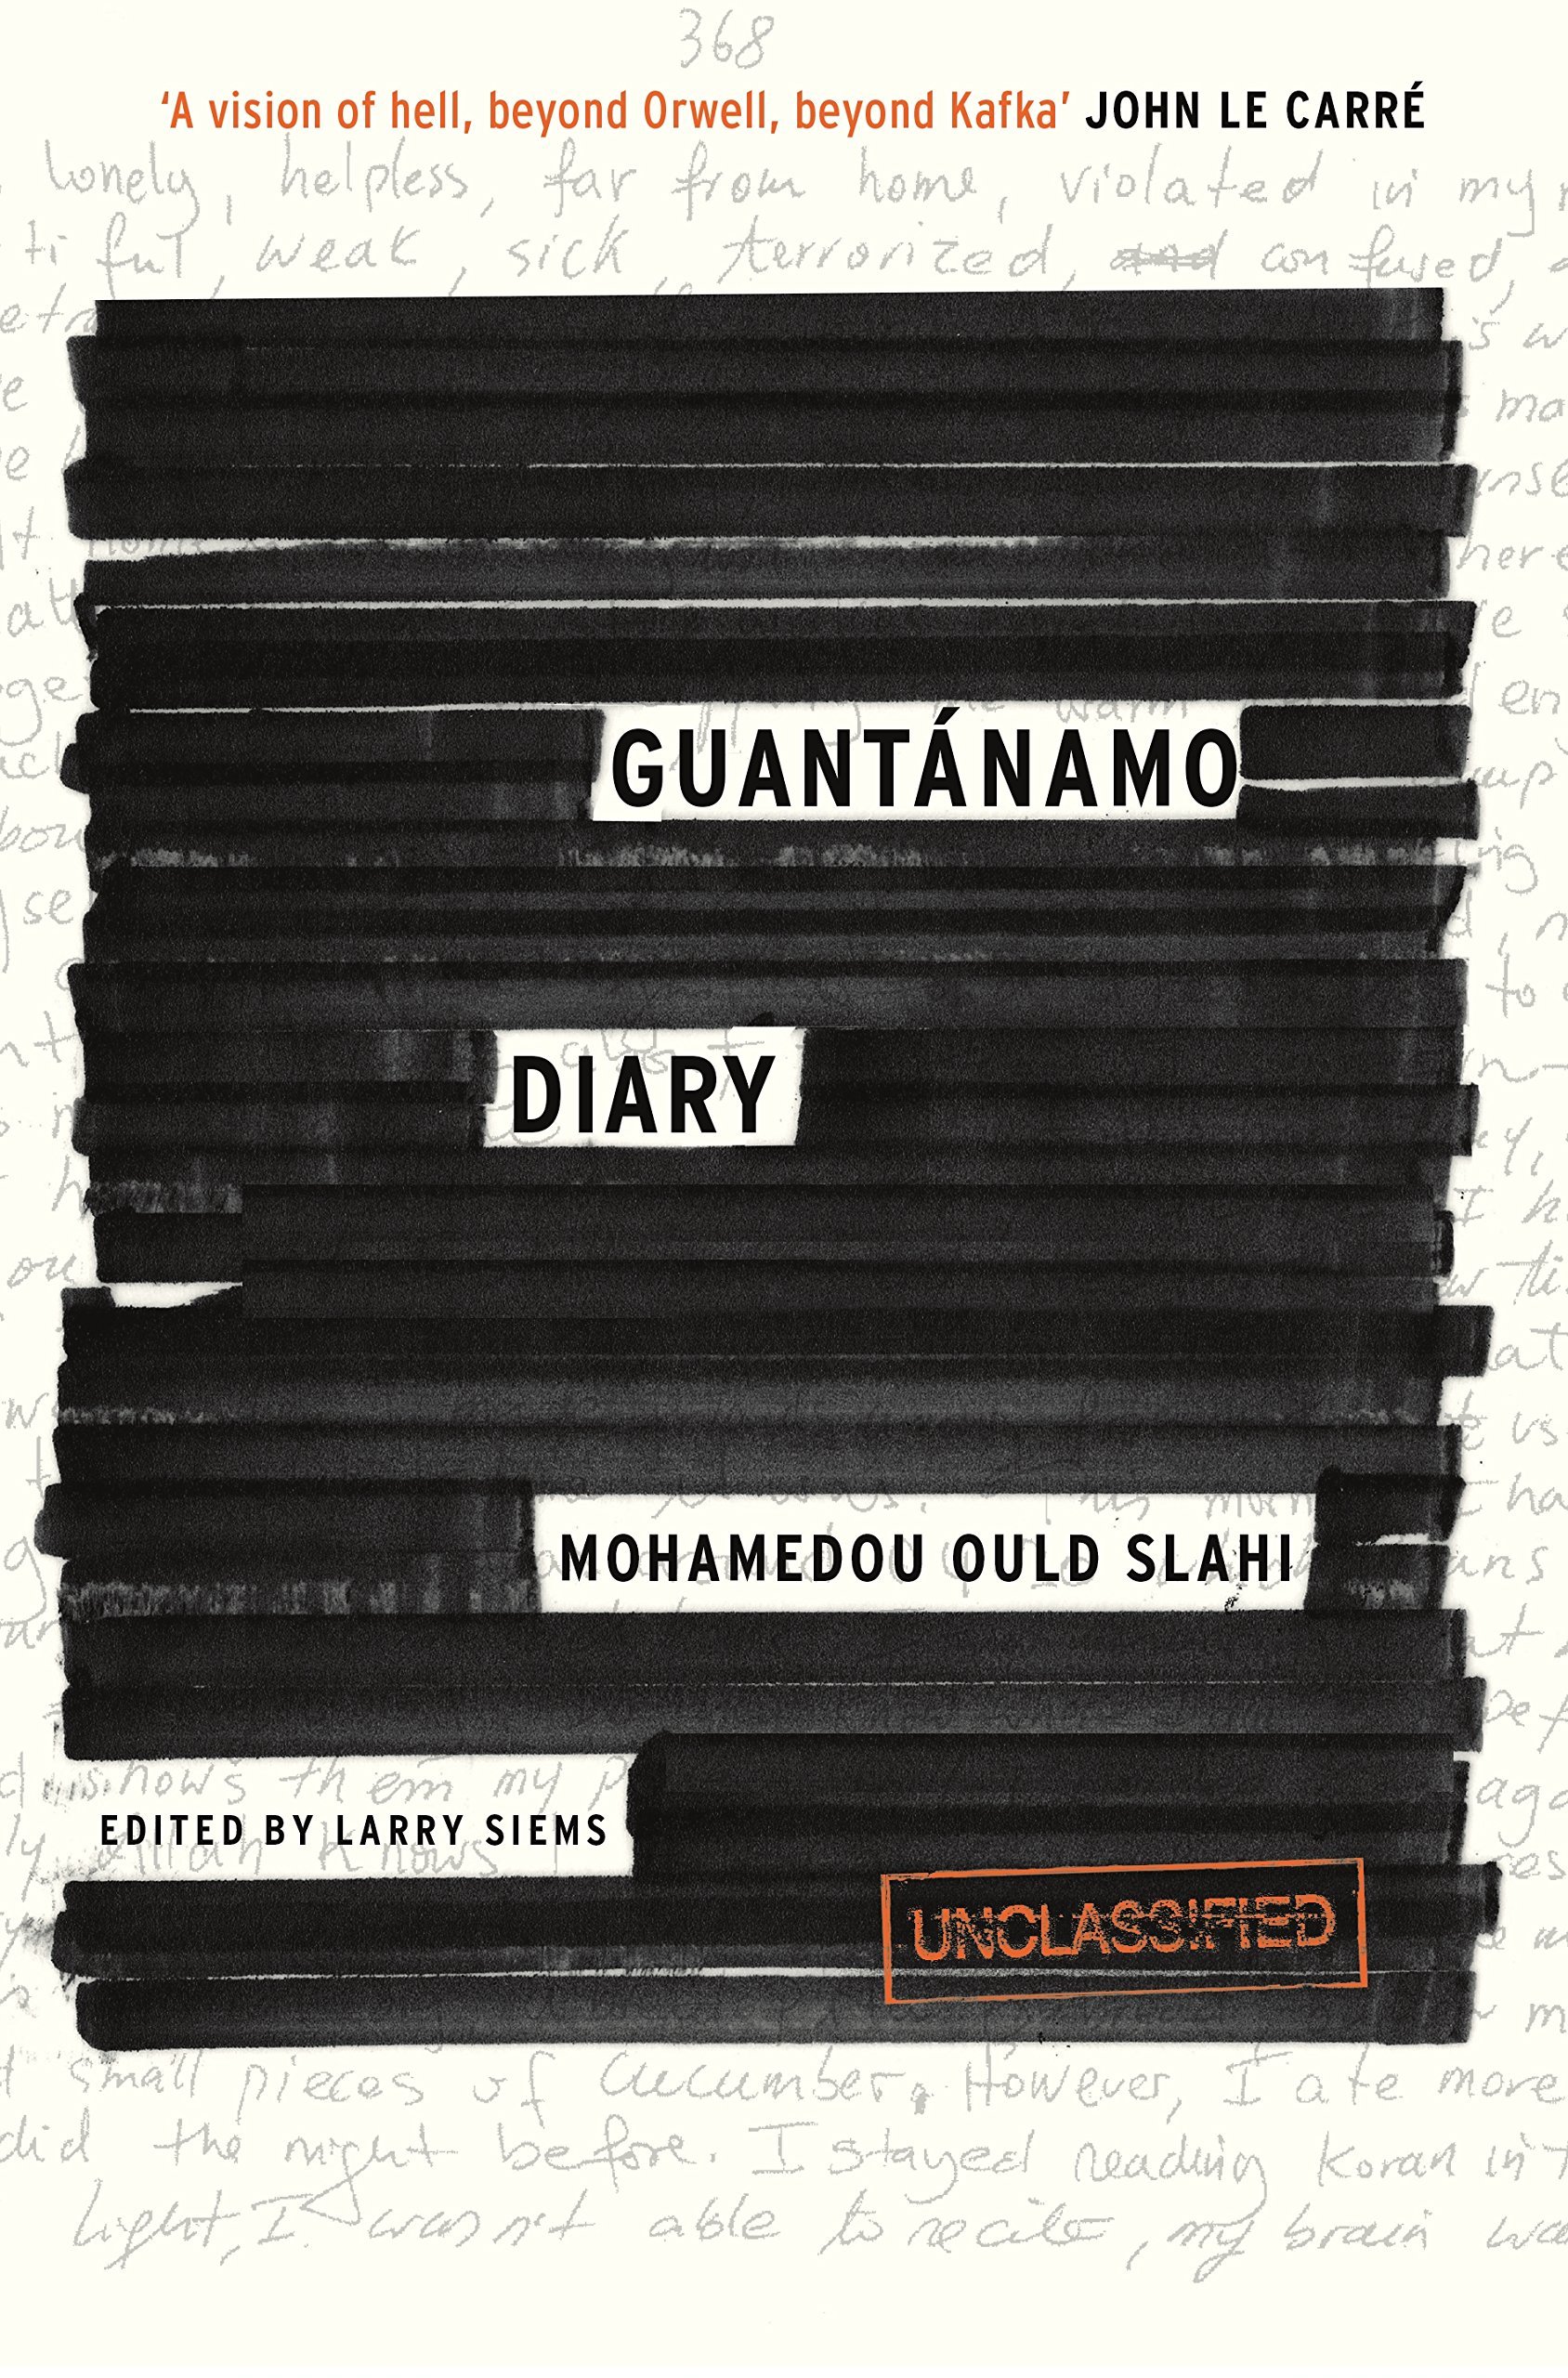 Guantanamo Bay Diaries by Mohamedou Slahi